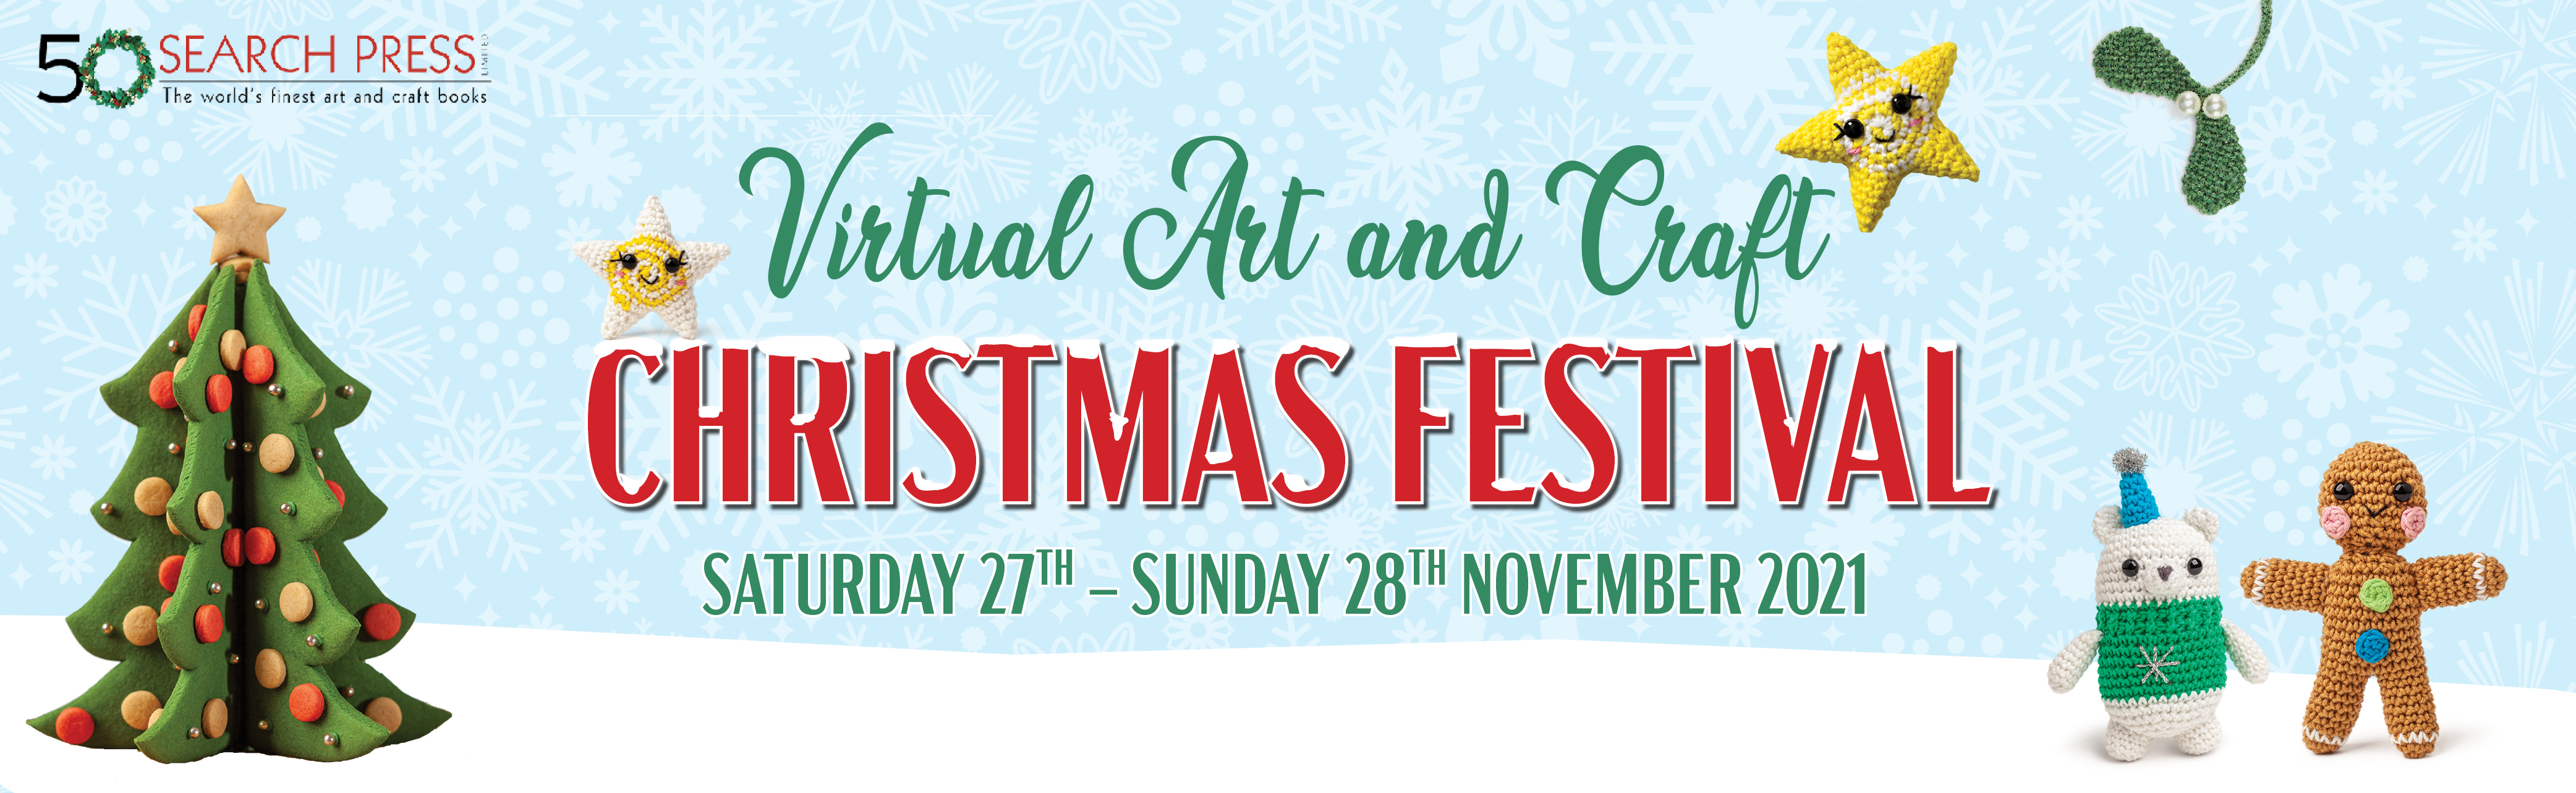 Virtual Art and Craft Christmas Festival 2021